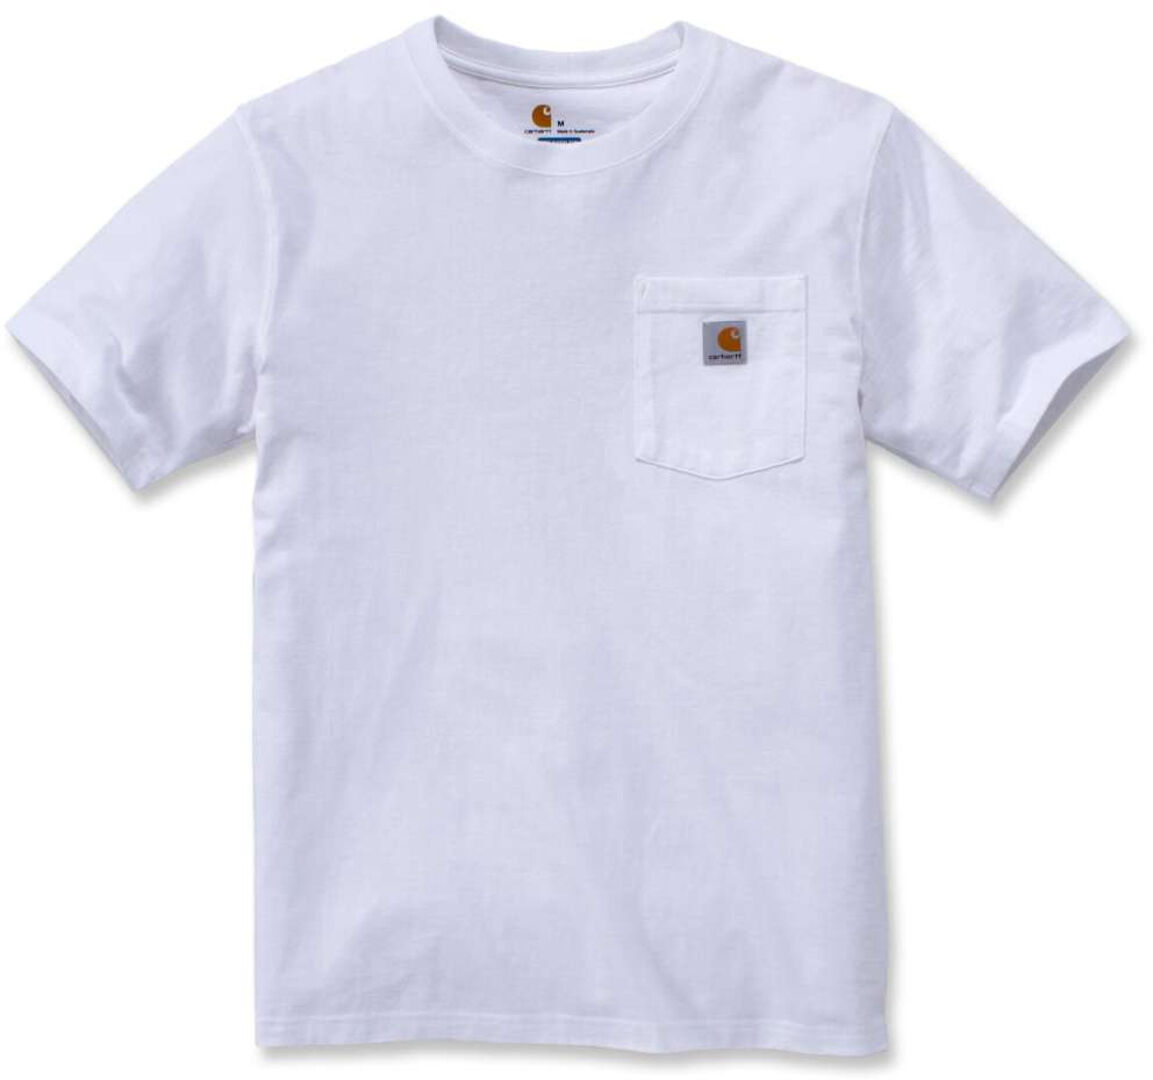 Carhartt Workwear Pocket T-Shirt  - White